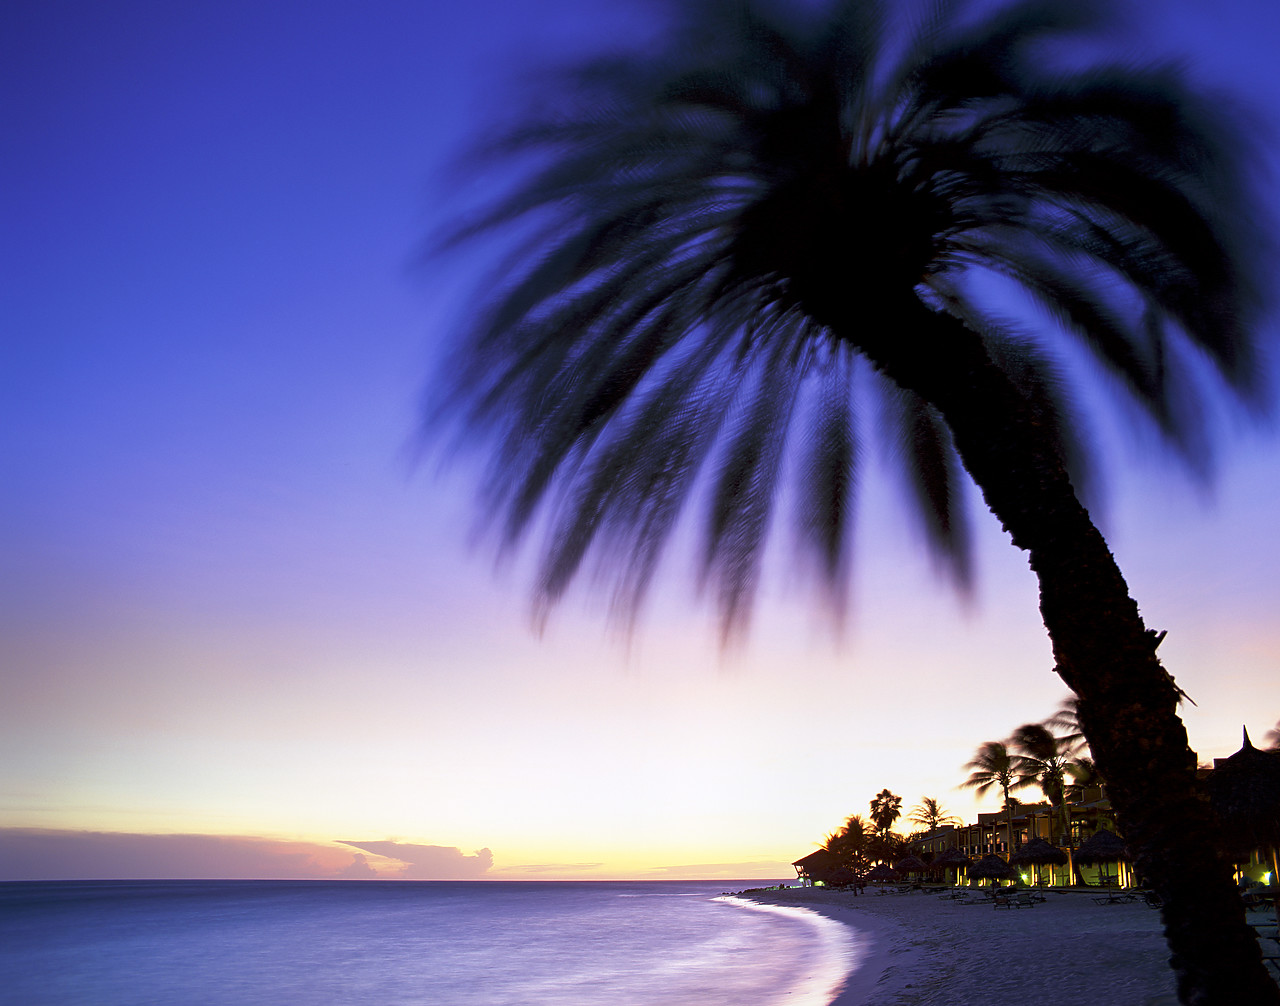 #030317-1 - Palm Tree at Sunset, Aruba, Lesser Antilles, Caribbean